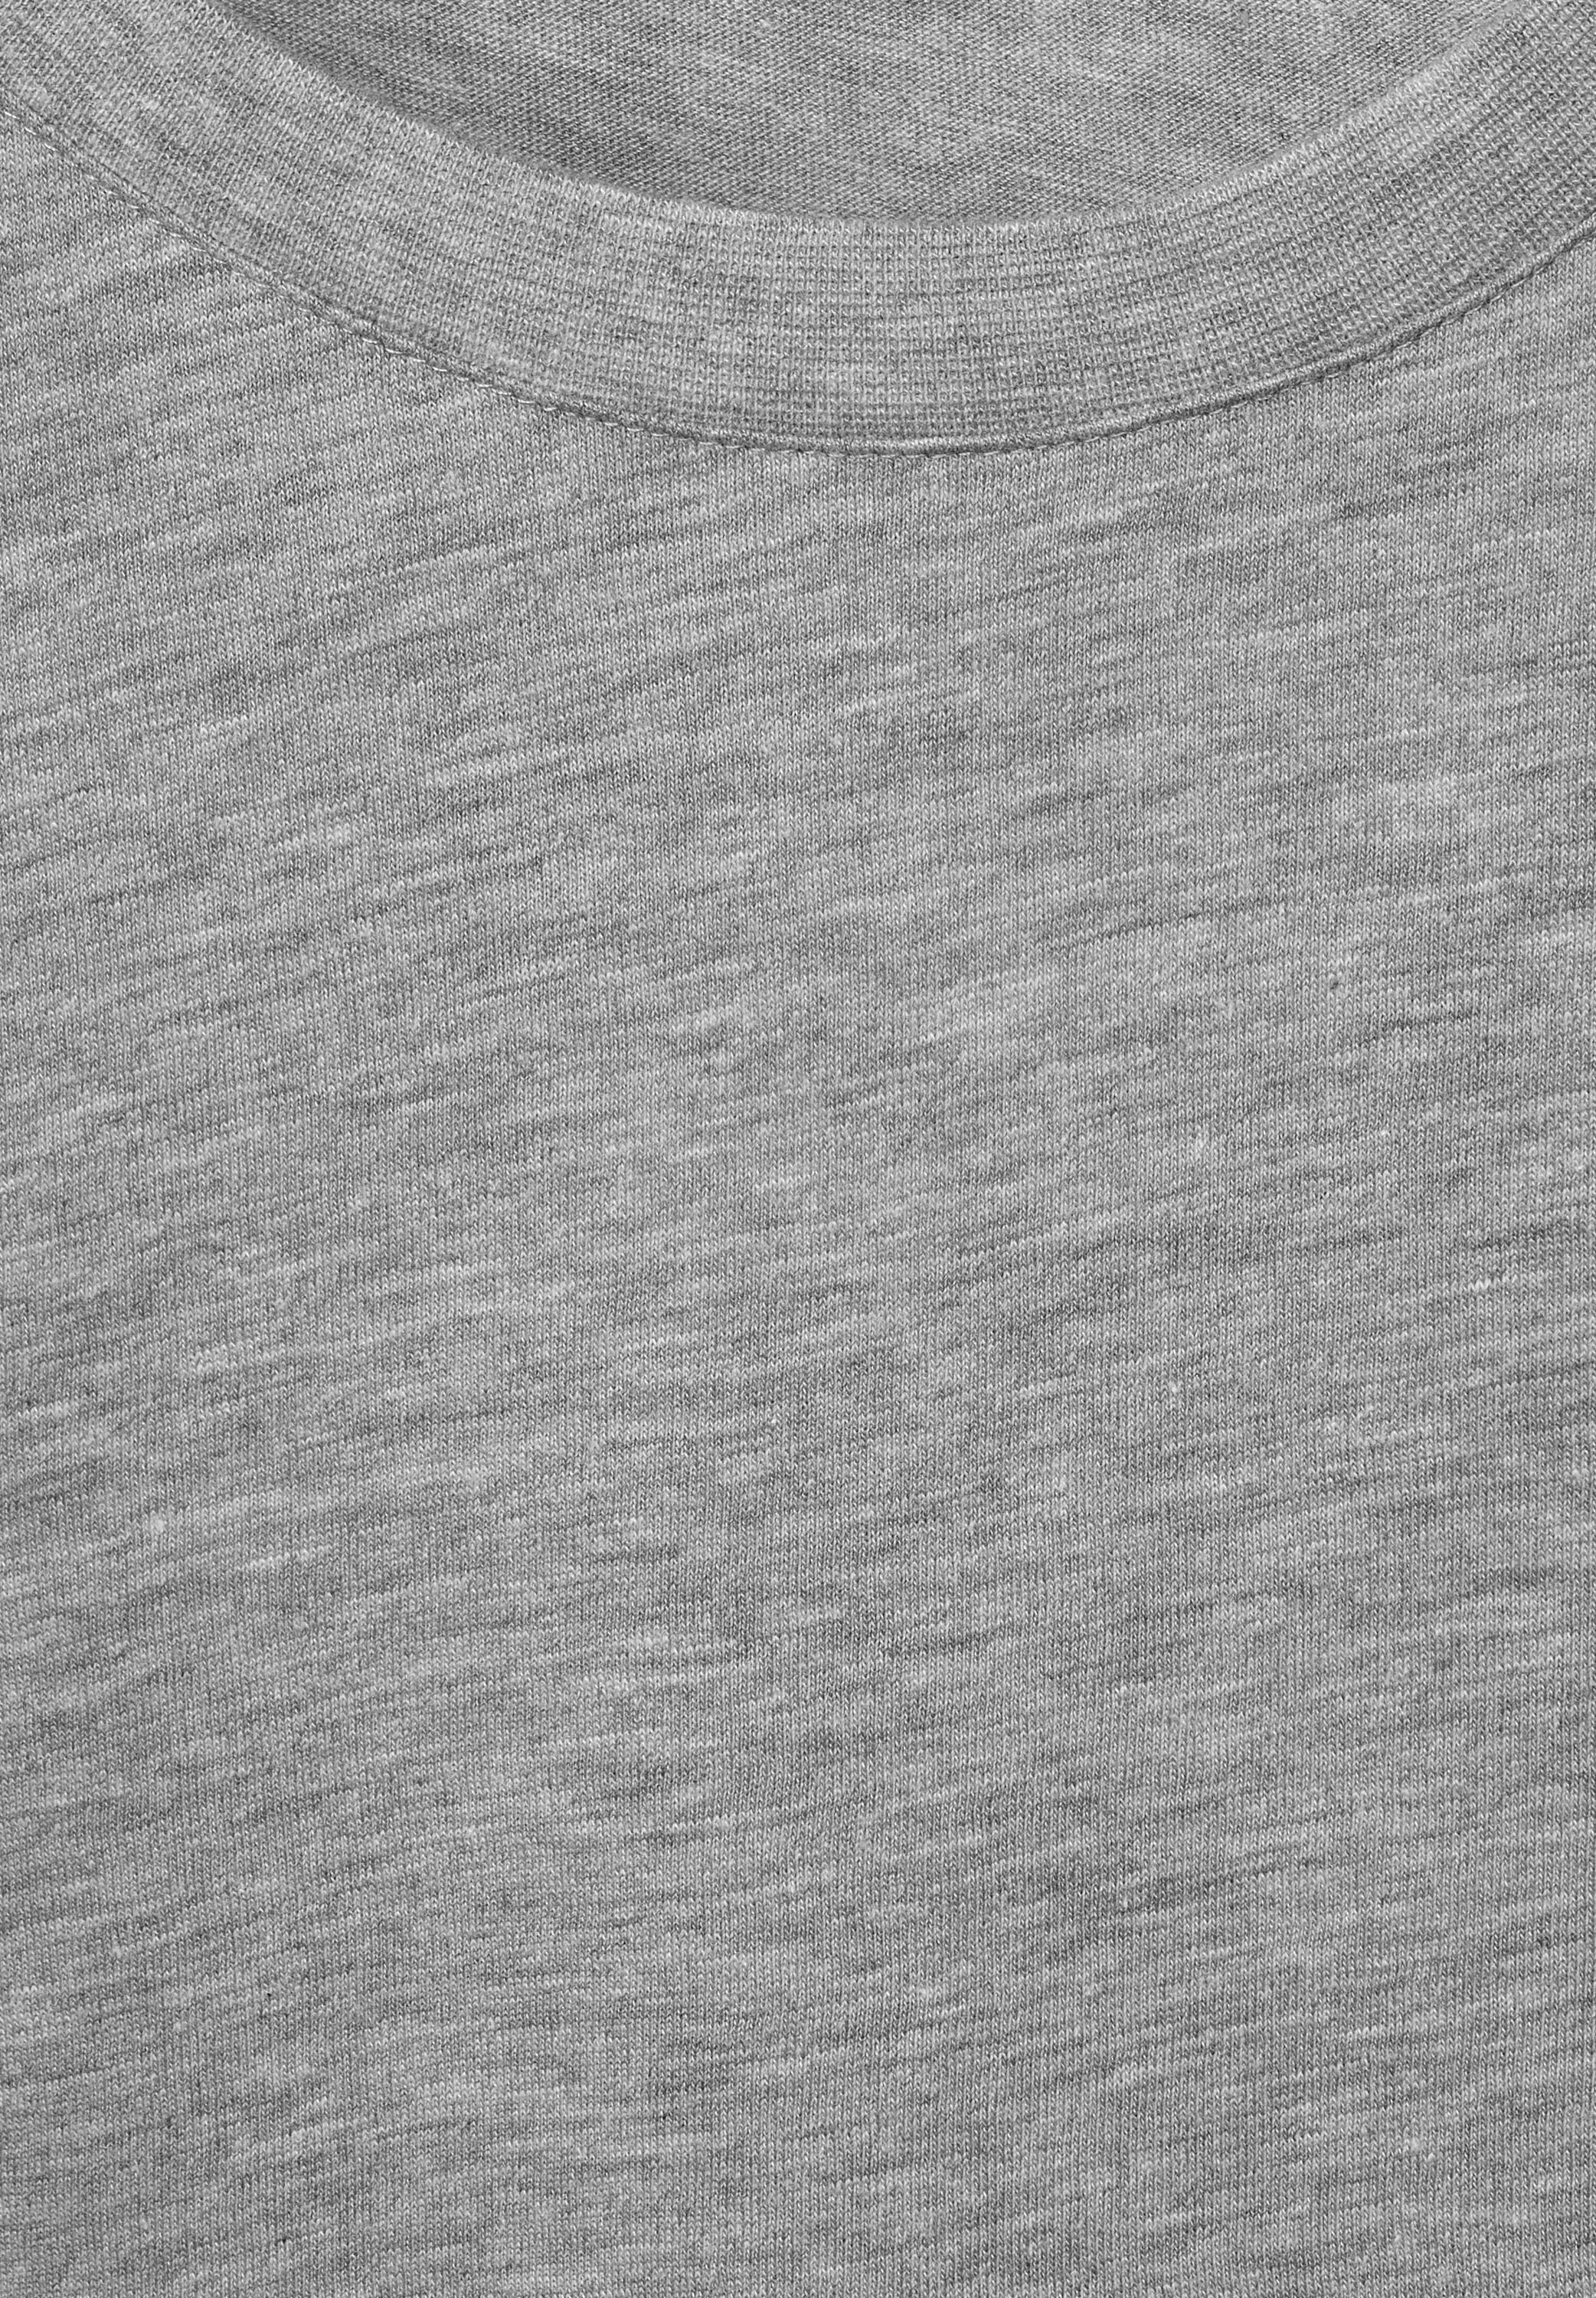 silver Optik STREET T-Shirt Melange in ONE grey MEN melange